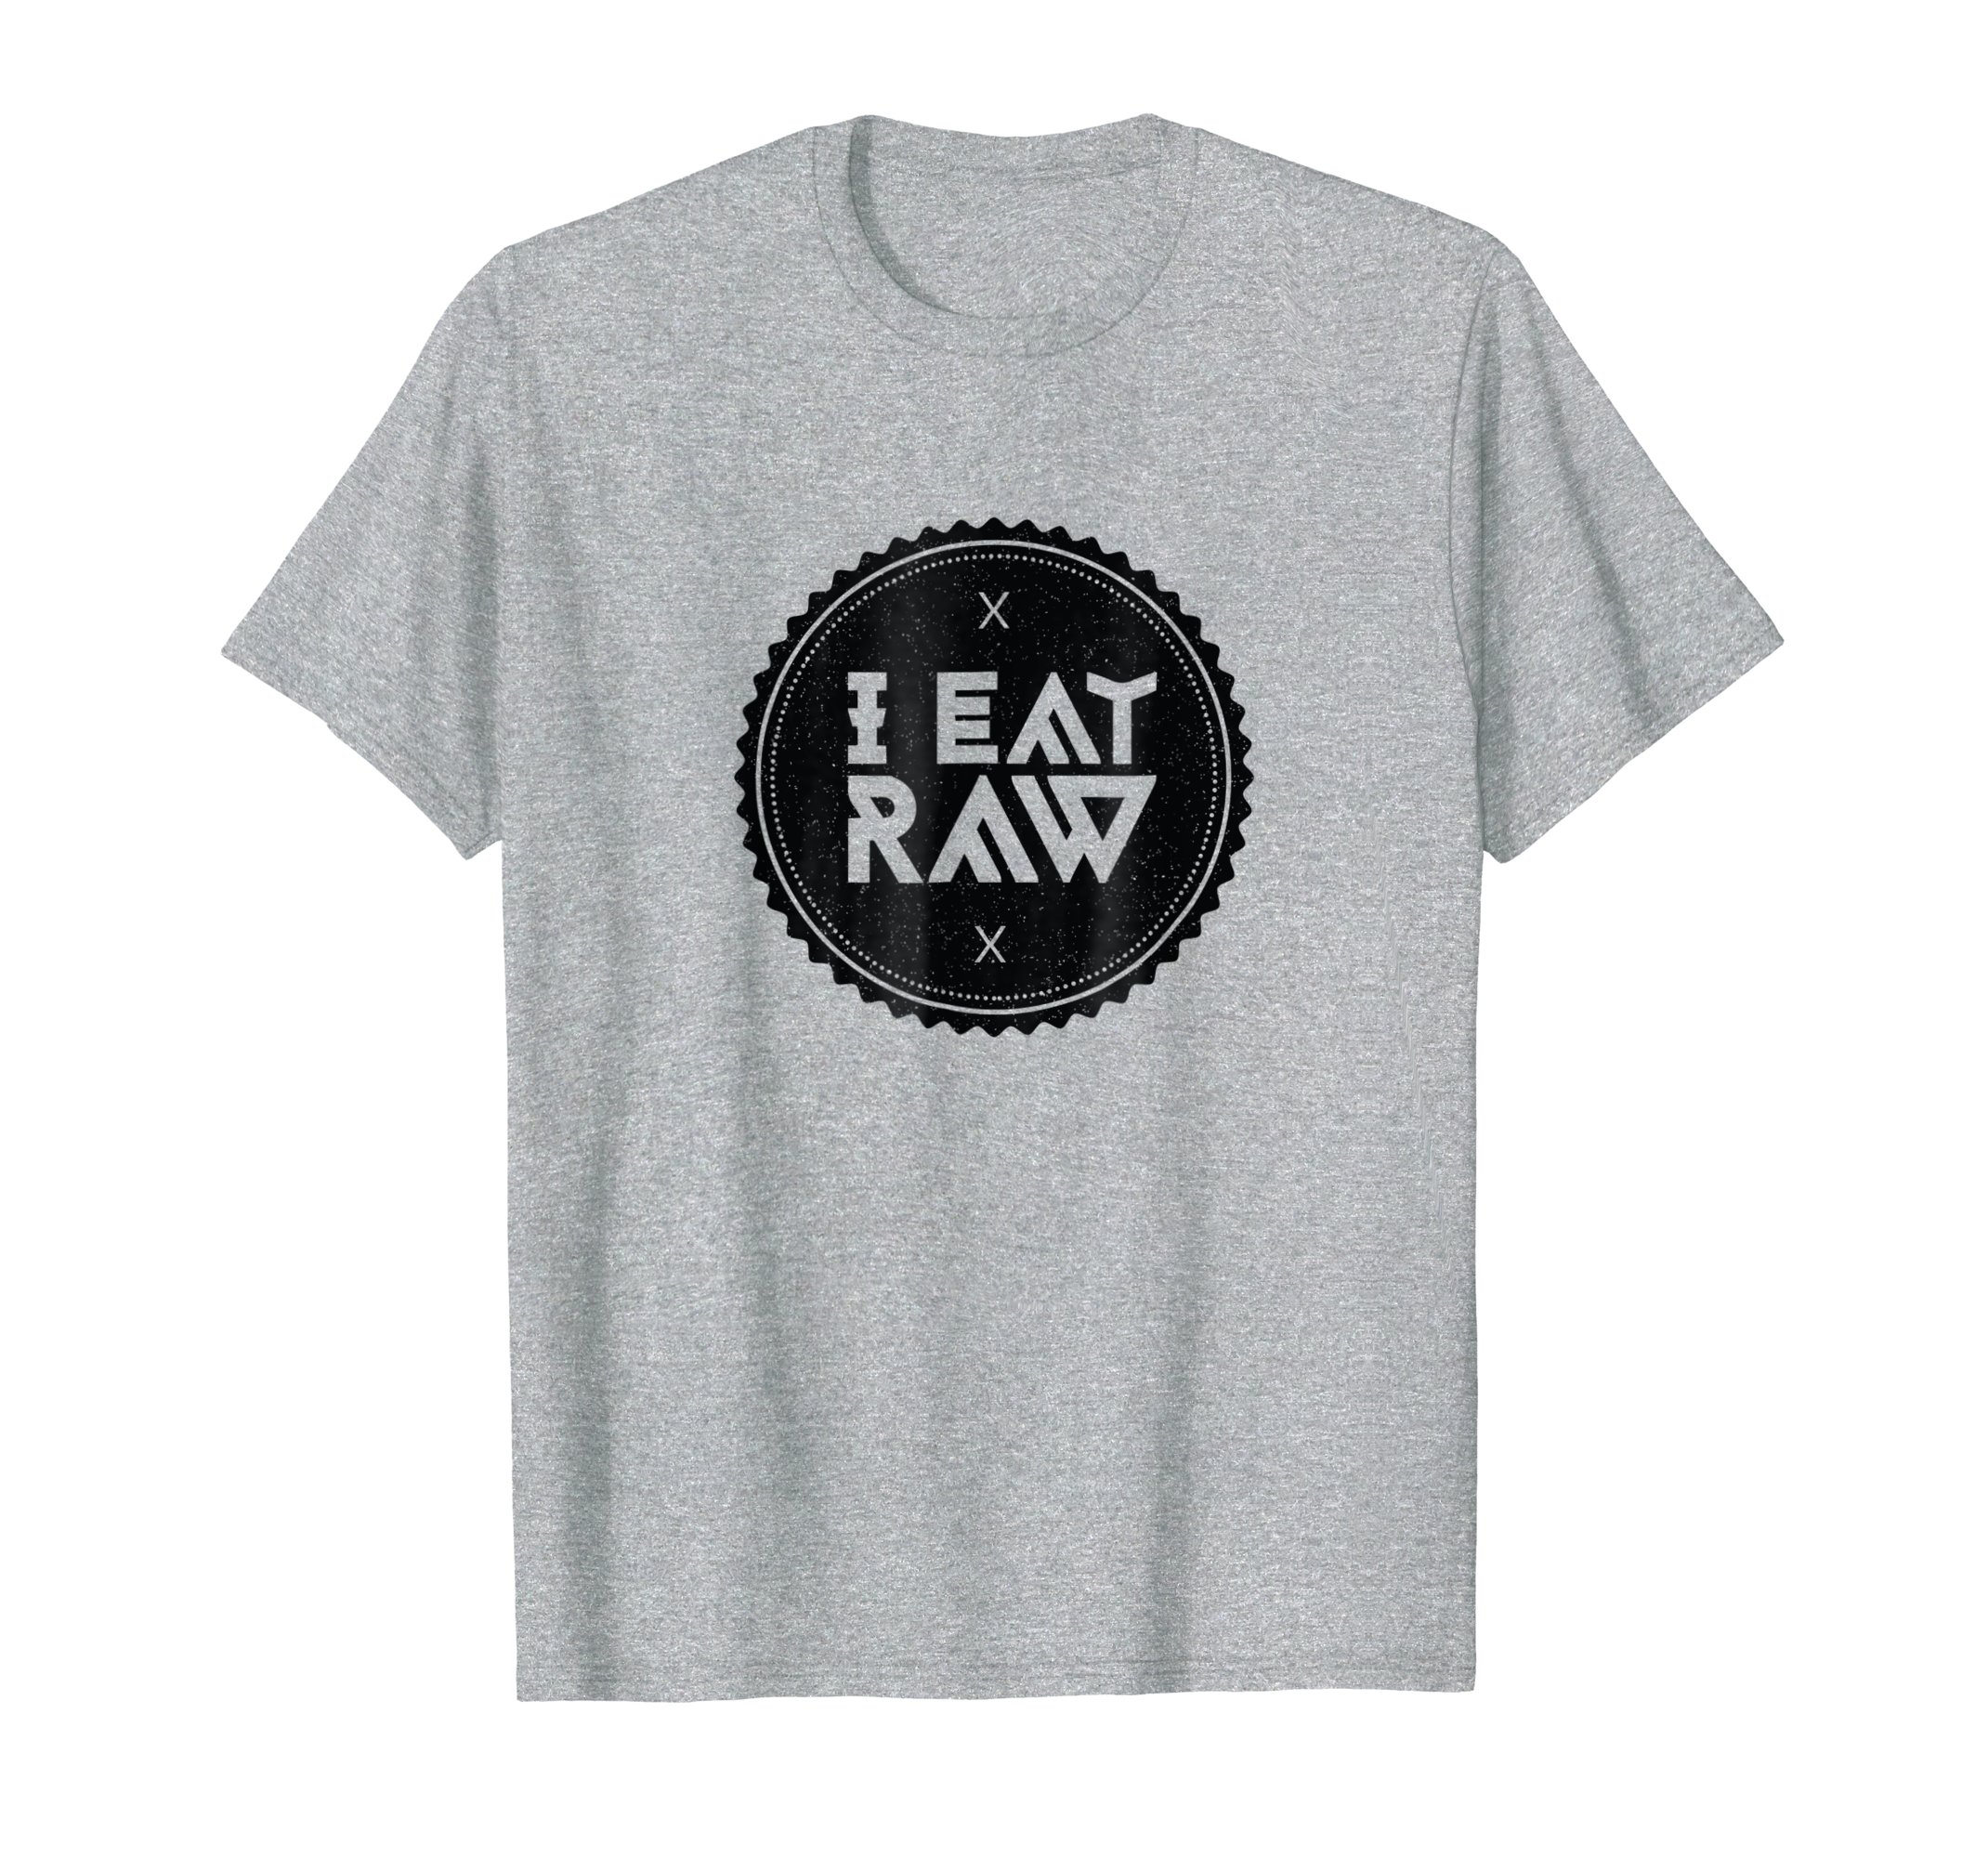 Brandon Charnell I Eat Raw Vegan Vegetarian T-Shirt Healthy Food Diet